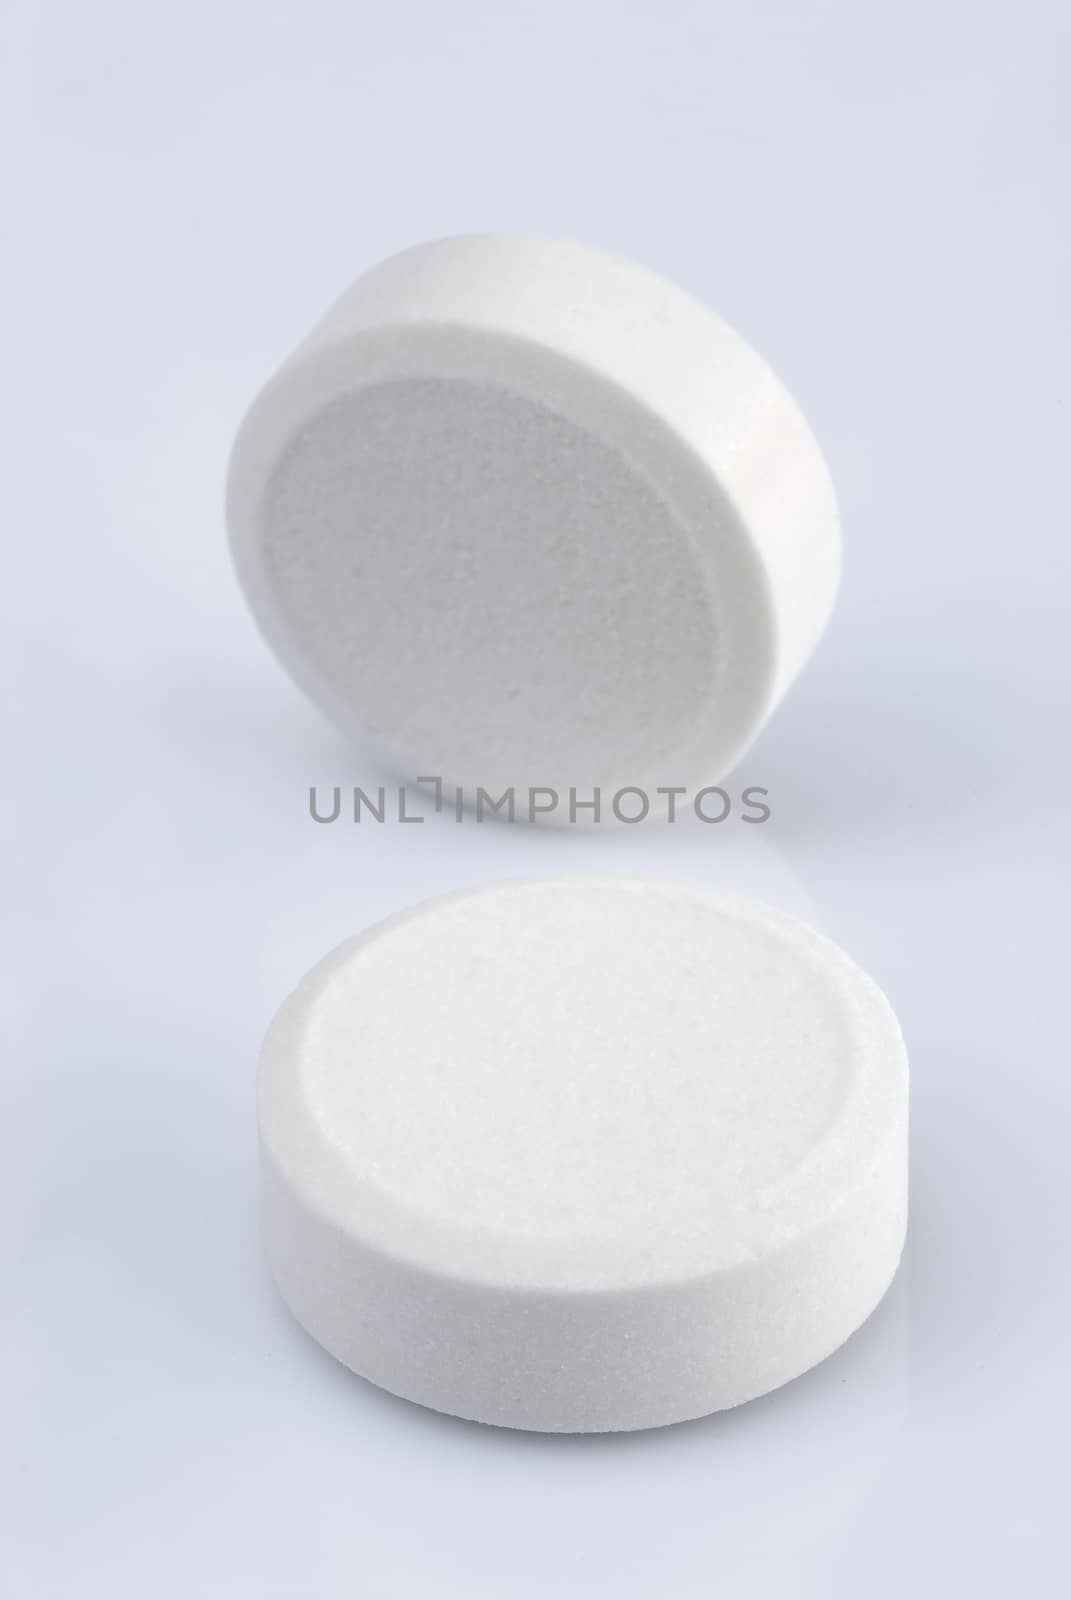 white pills on a white background 